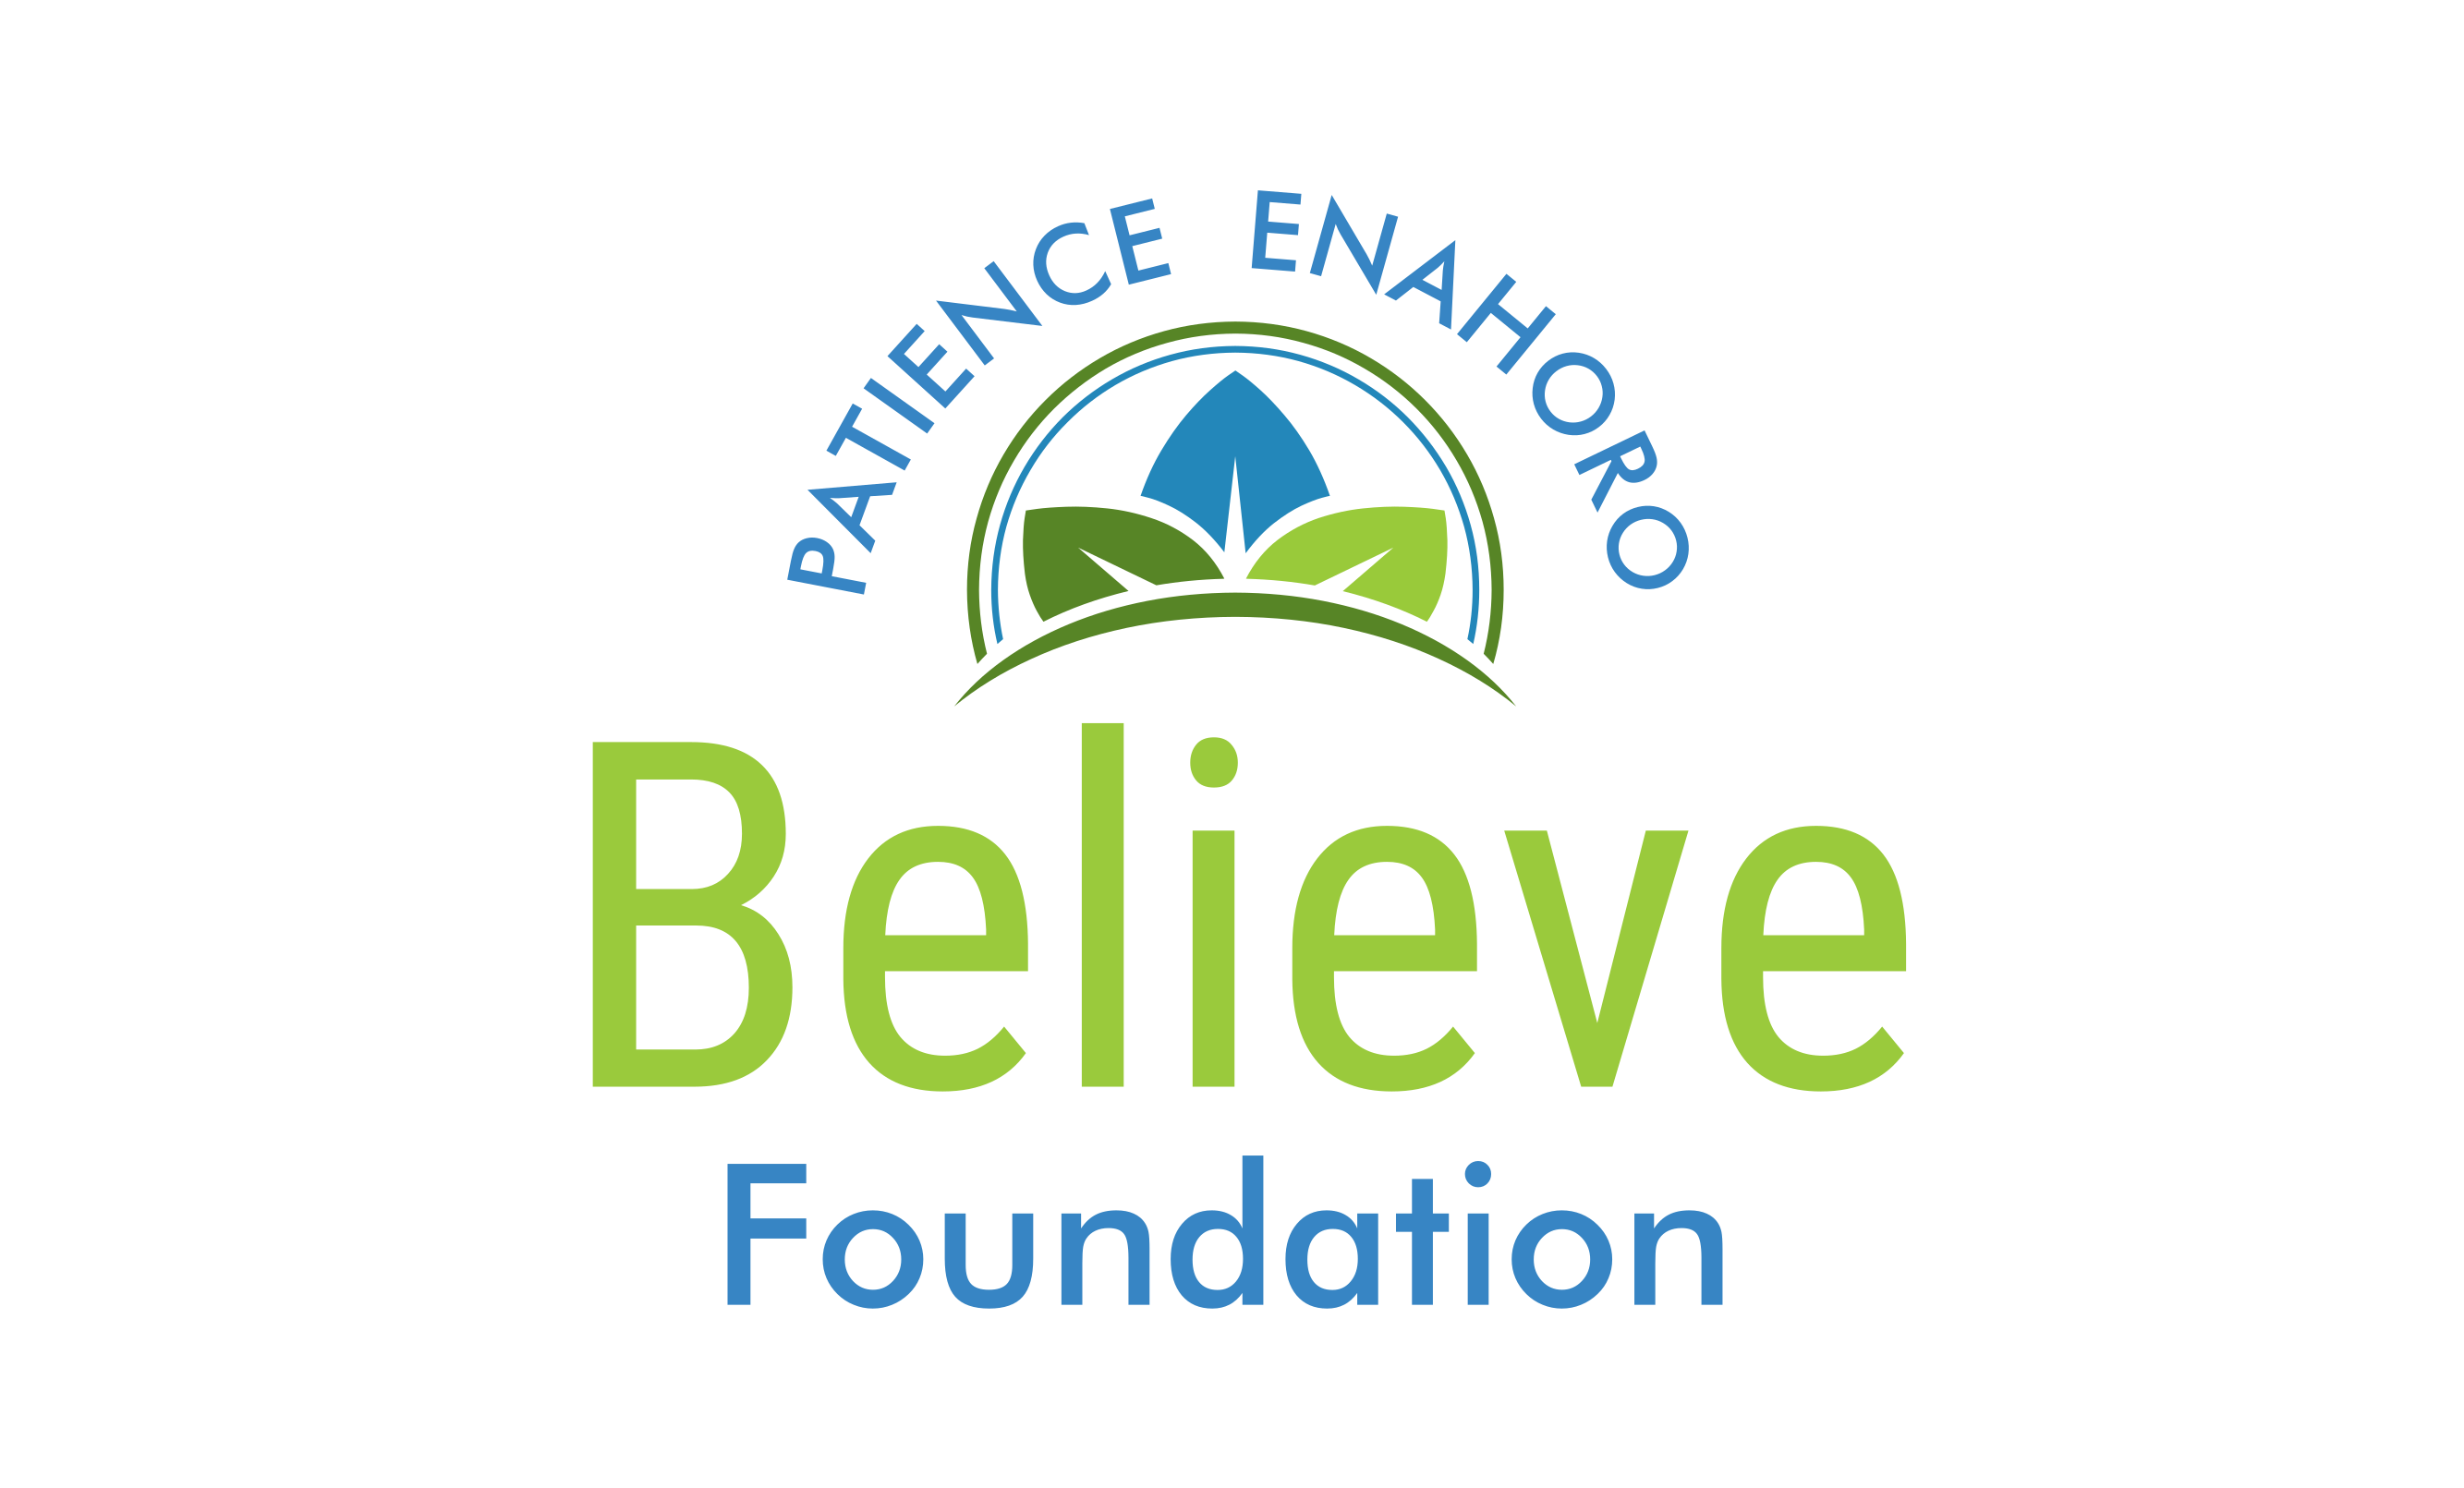 Patience Enahoro Believe Foundation